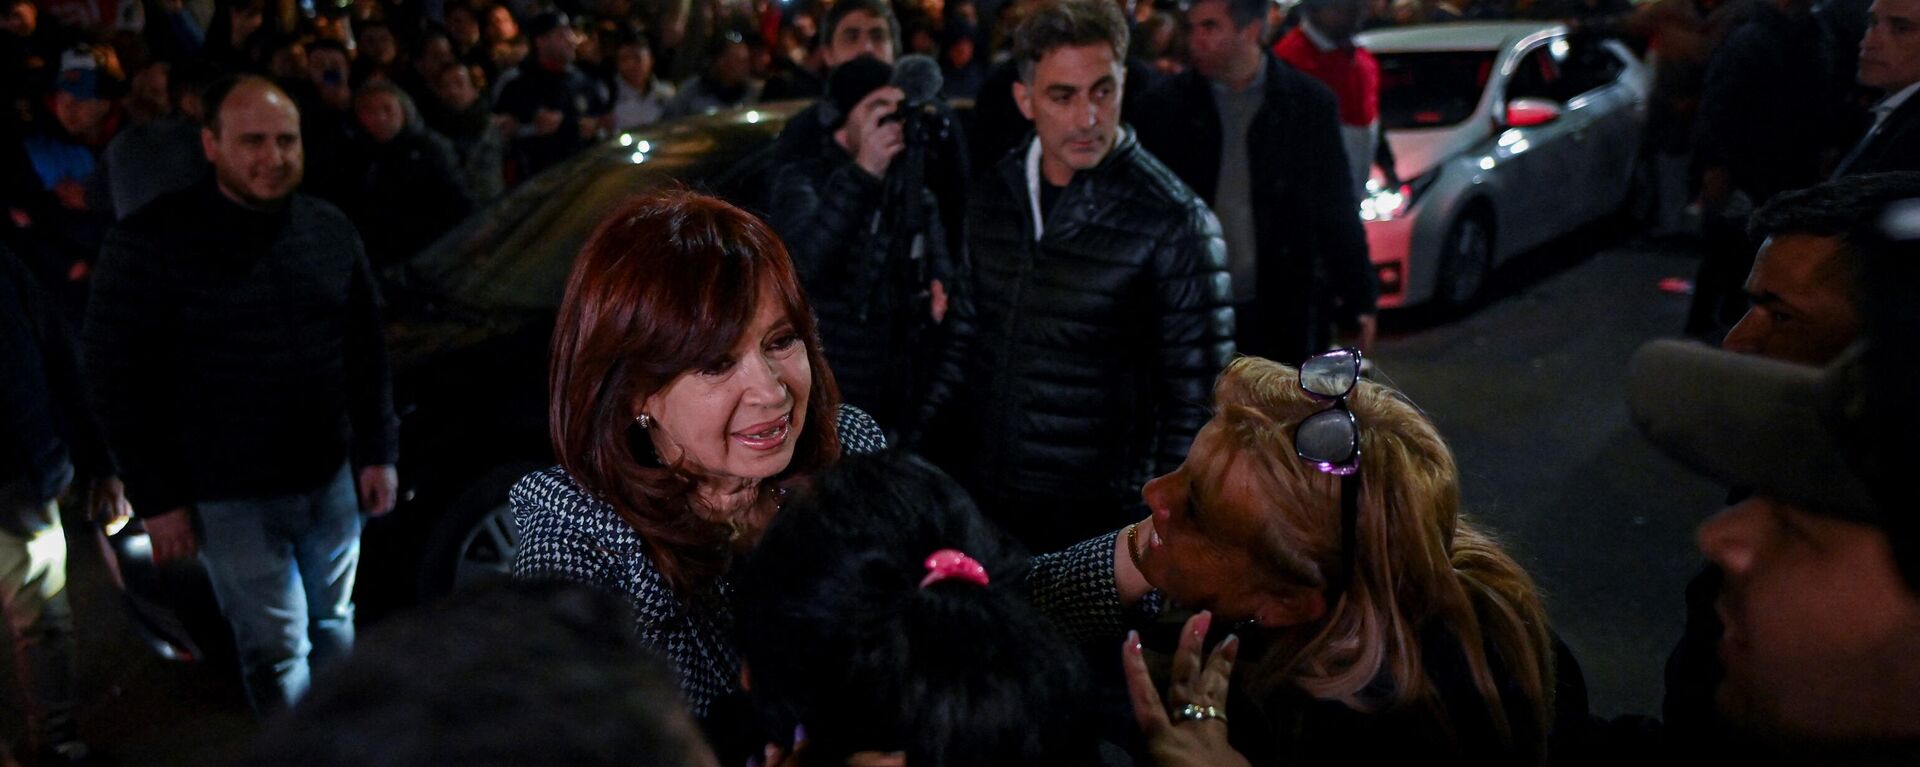 La vicepresidenta de la República, Cristina Fernández de Kirchner - Sputnik Mundo, 1920, 07.09.2022